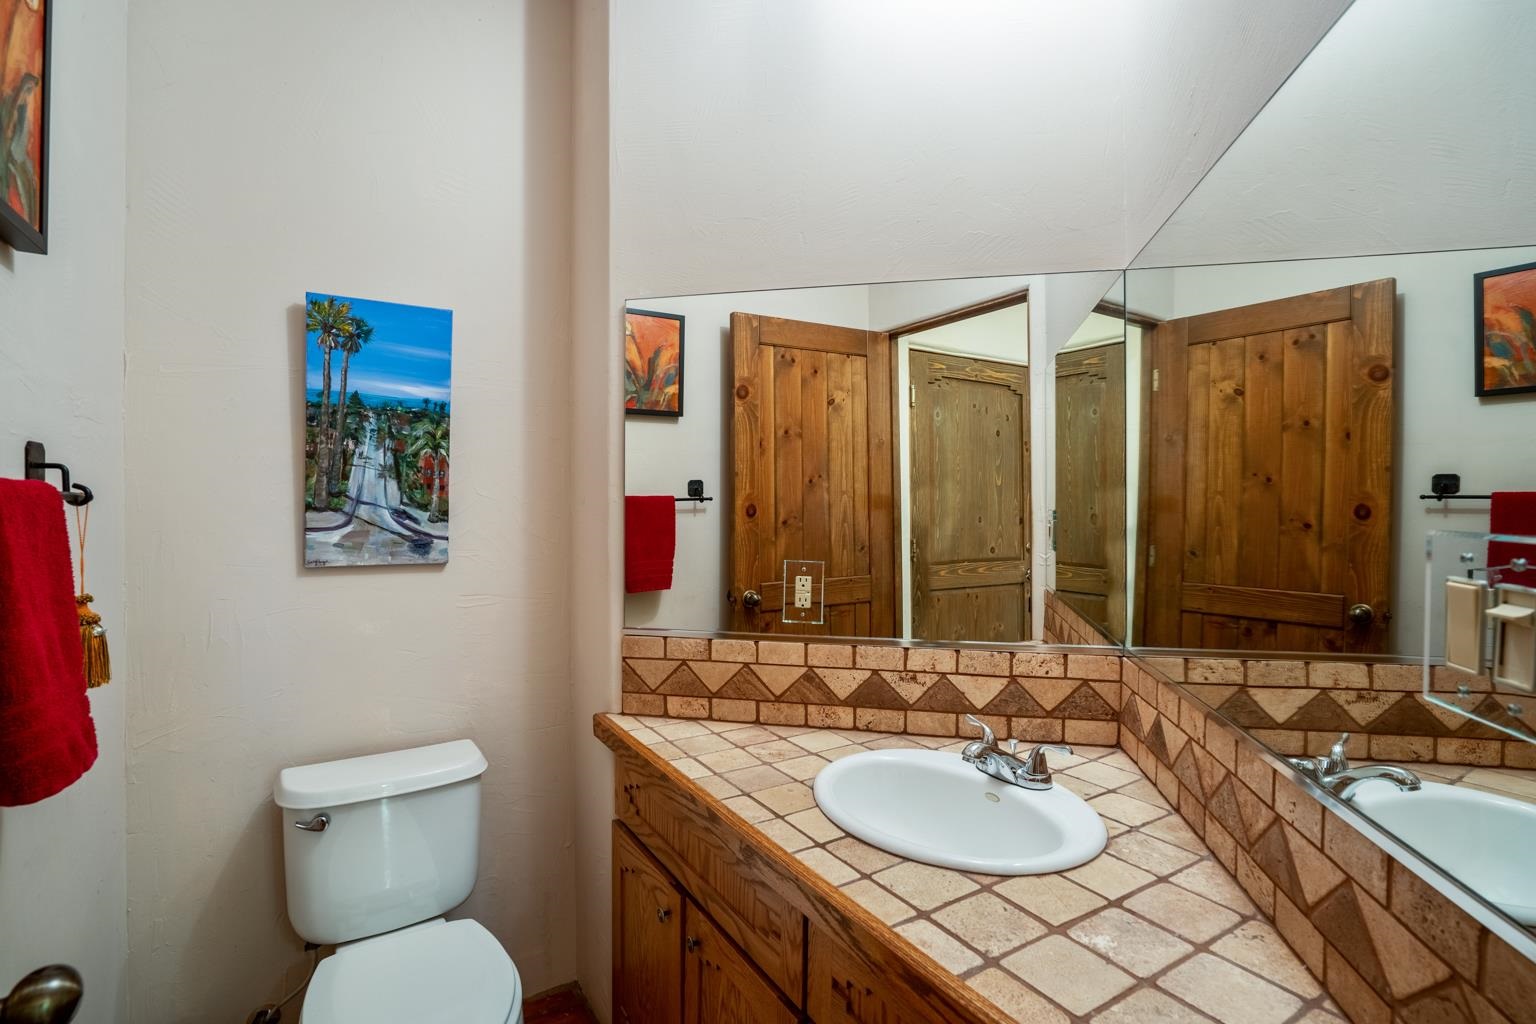 3 Foxglove, Santa Fe, New Mexico 87508, 3 Bedrooms Bedrooms, ,3 BathroomsBathrooms,Residential,For Sale,3 Foxglove,202102857